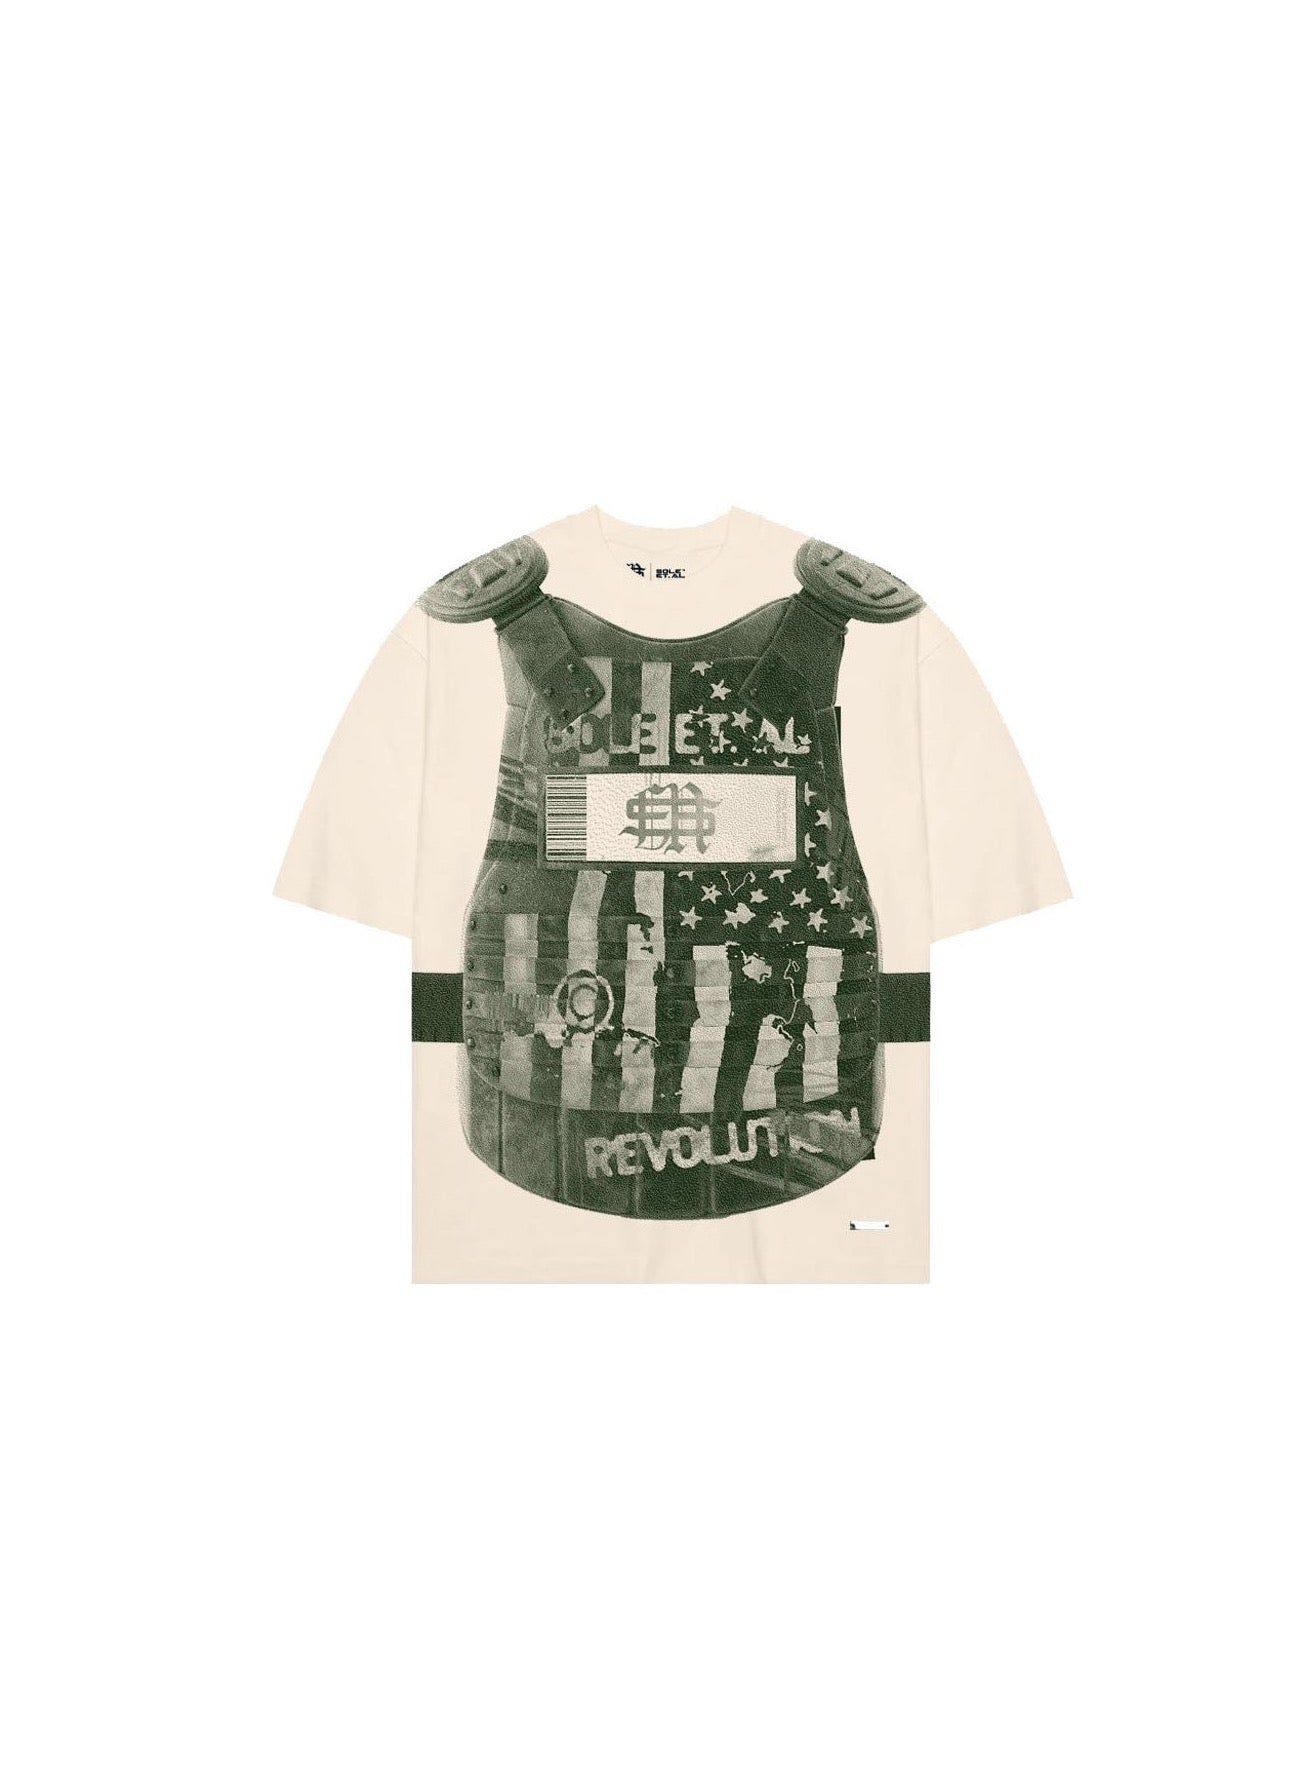 Sole et. Al United Revolutionary T-skjorte : Sand / militærgrønn